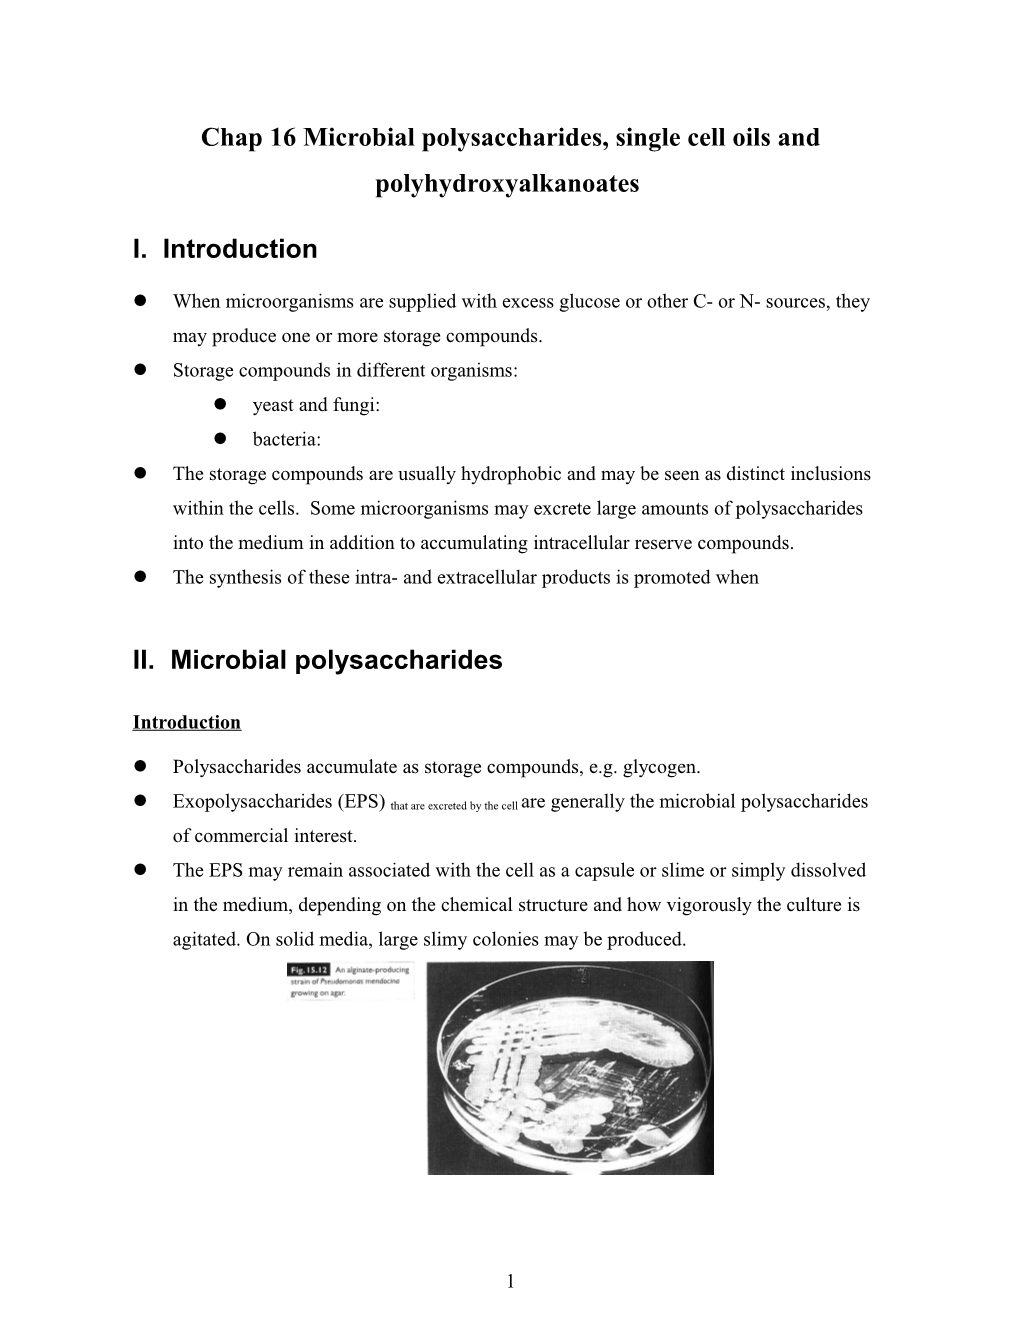 Chap 16 Microbial Polysaccharides,Single Cell Oils and Polyhydroxyalkanoates